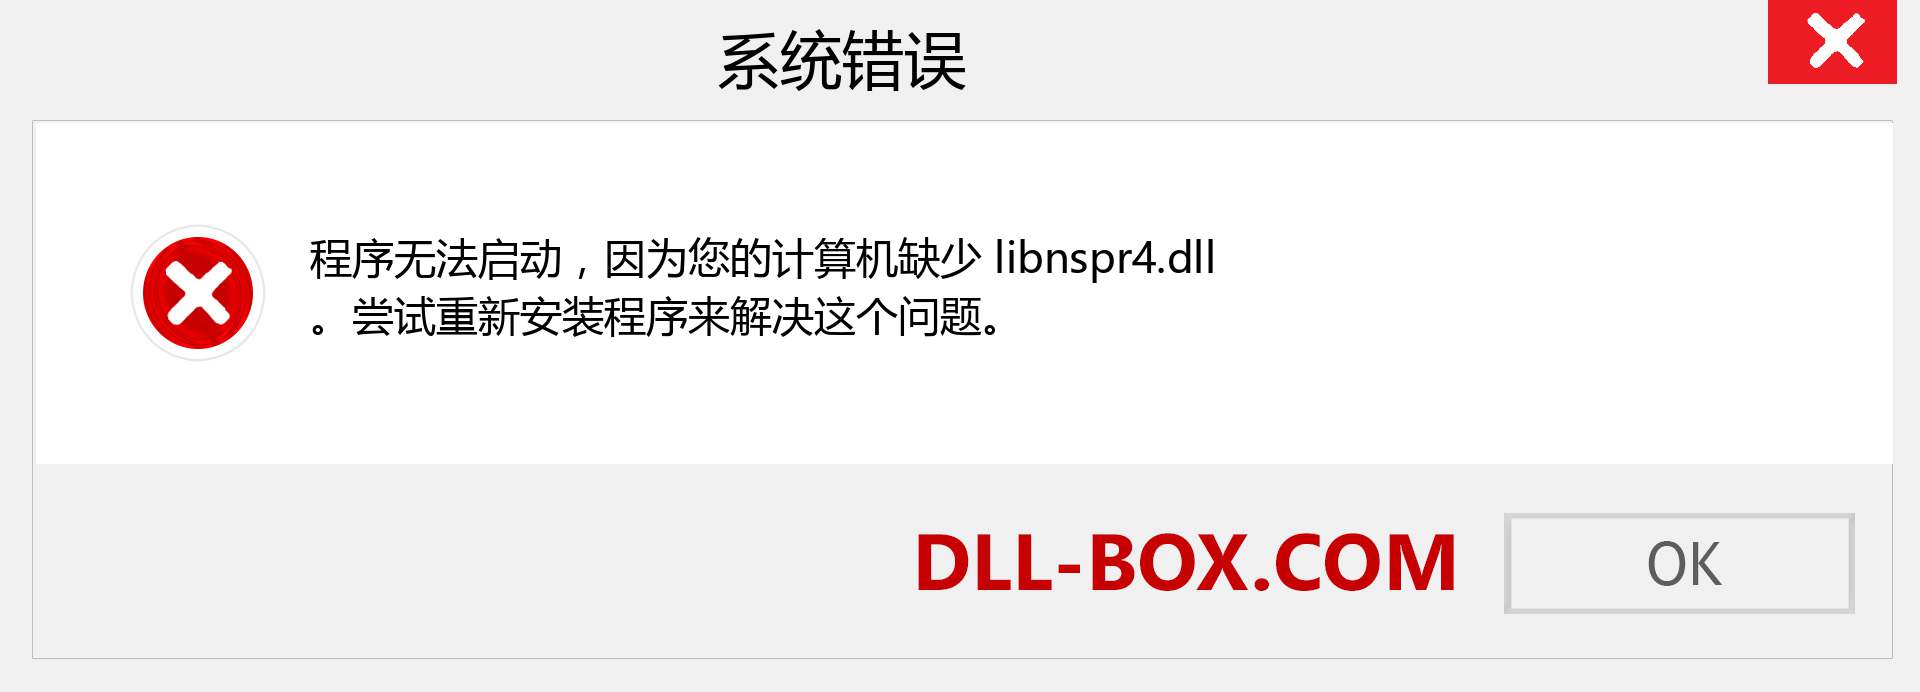 libnspr4.dll 文件丢失？。 适用于 Windows 7、8、10 的下载 - 修复 Windows、照片、图像上的 libnspr4 dll 丢失错误